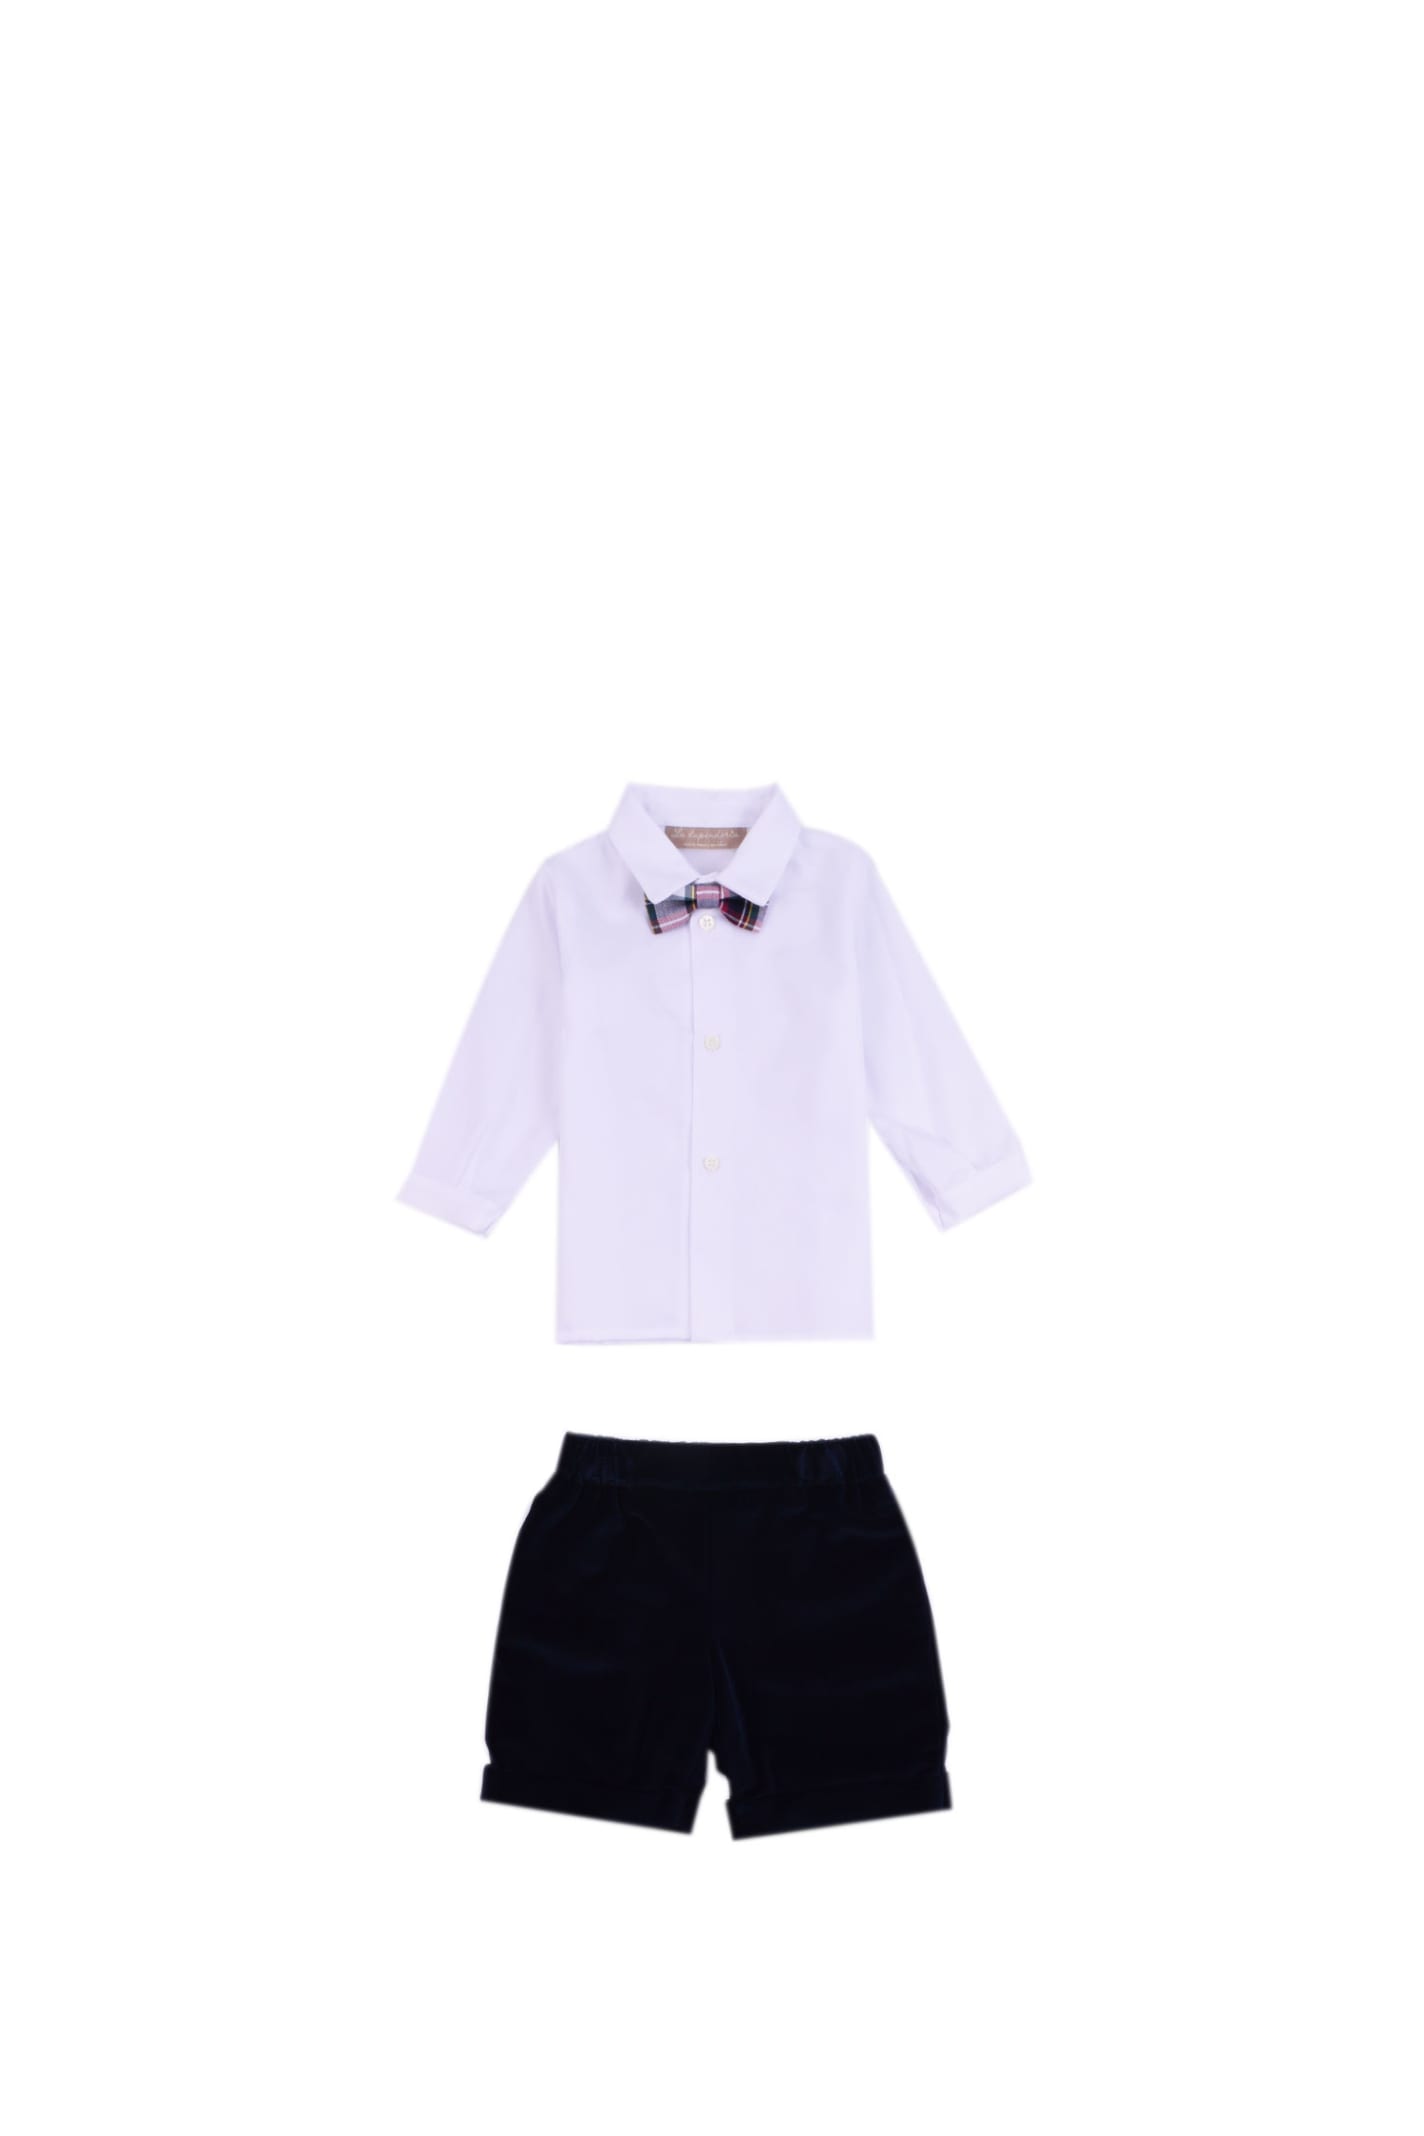 La stupenderia Cotton Shirt, Papillon And Shorts